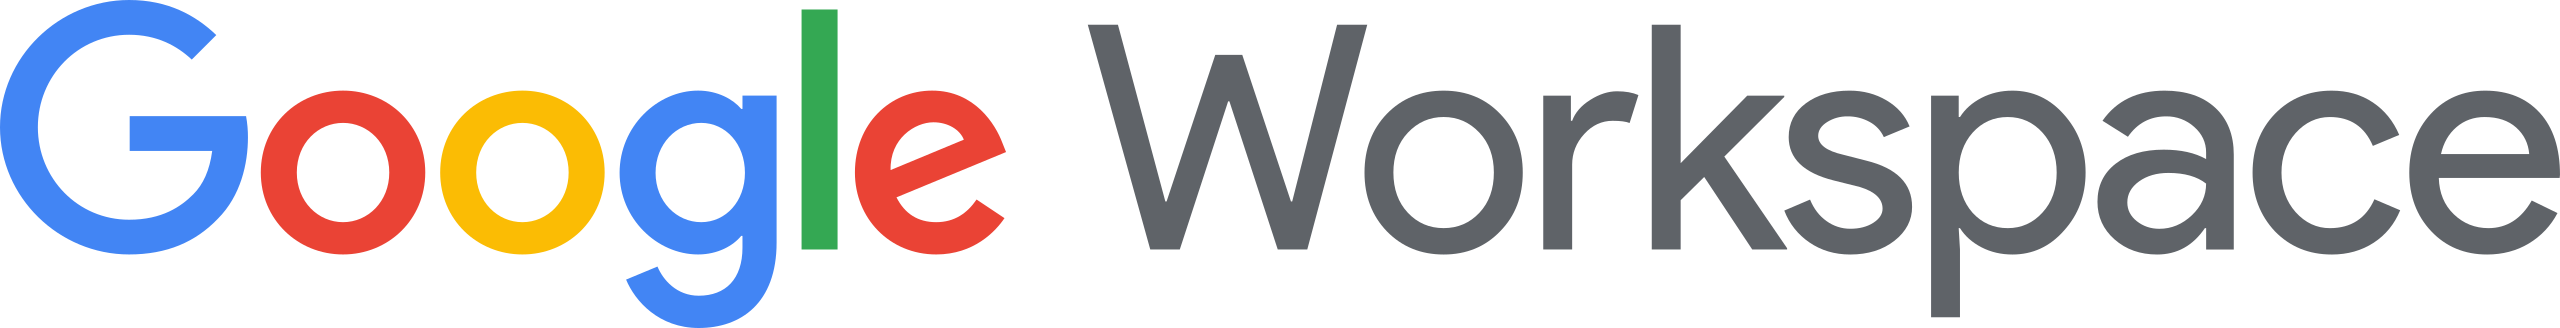 Google_Workspace_Logo.svg